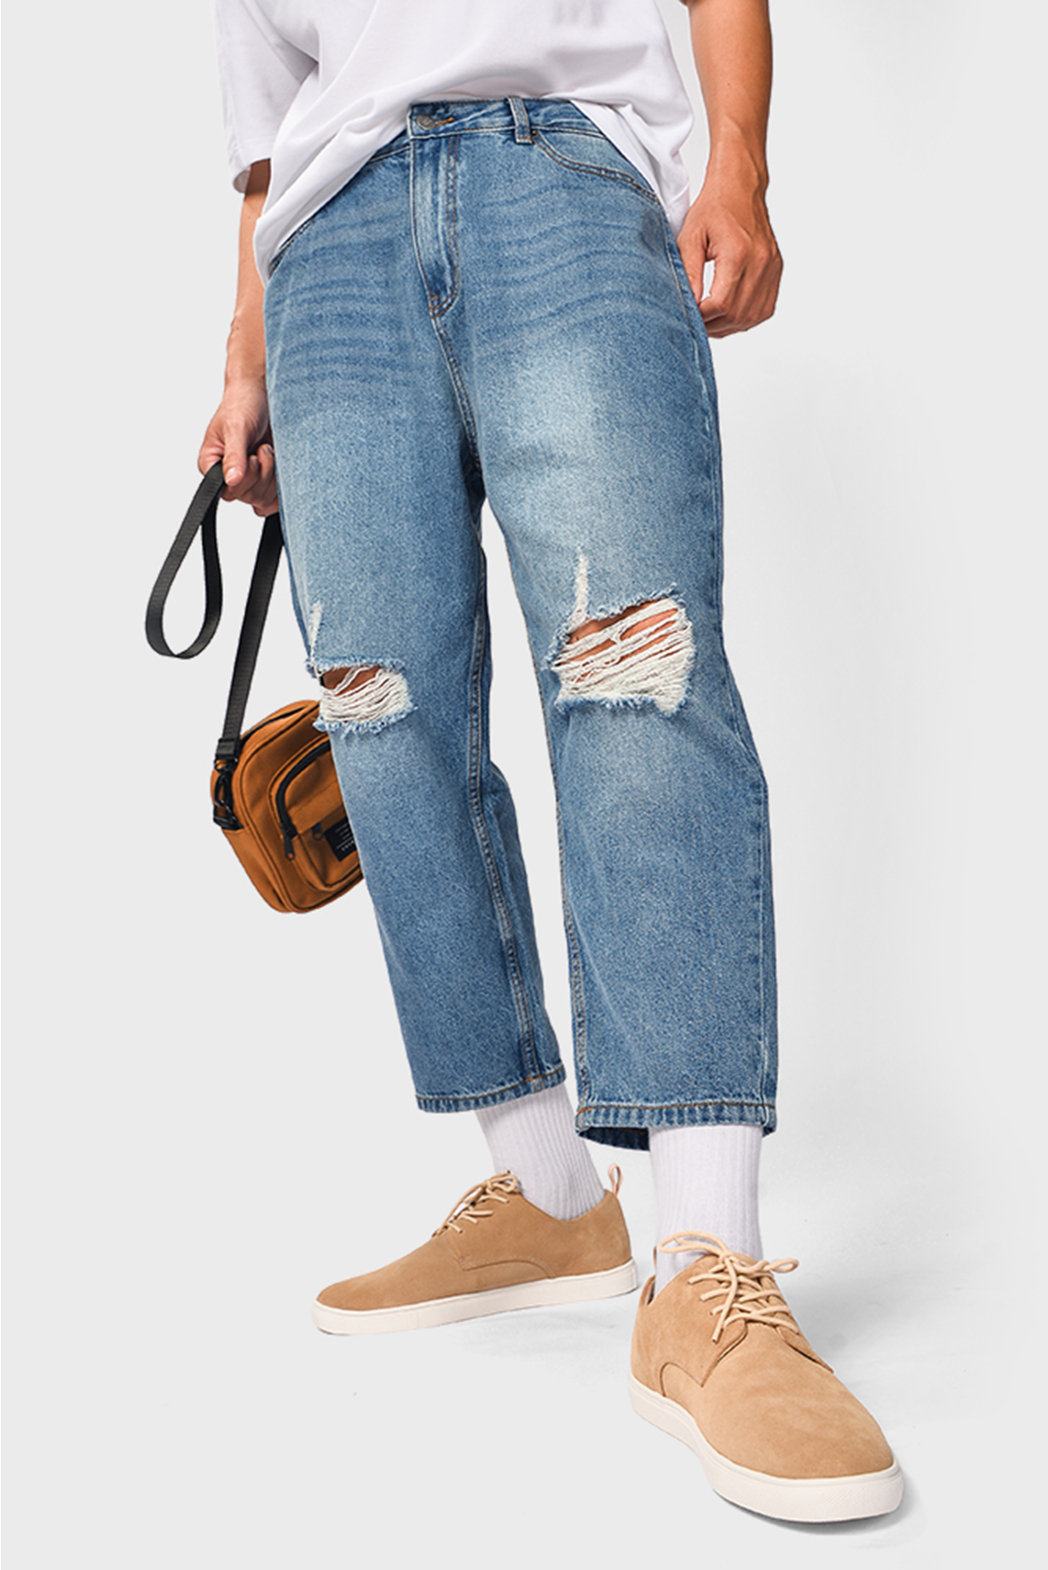 indigo Quần jeans loose rách gối DNP09-F19 – QJ128003